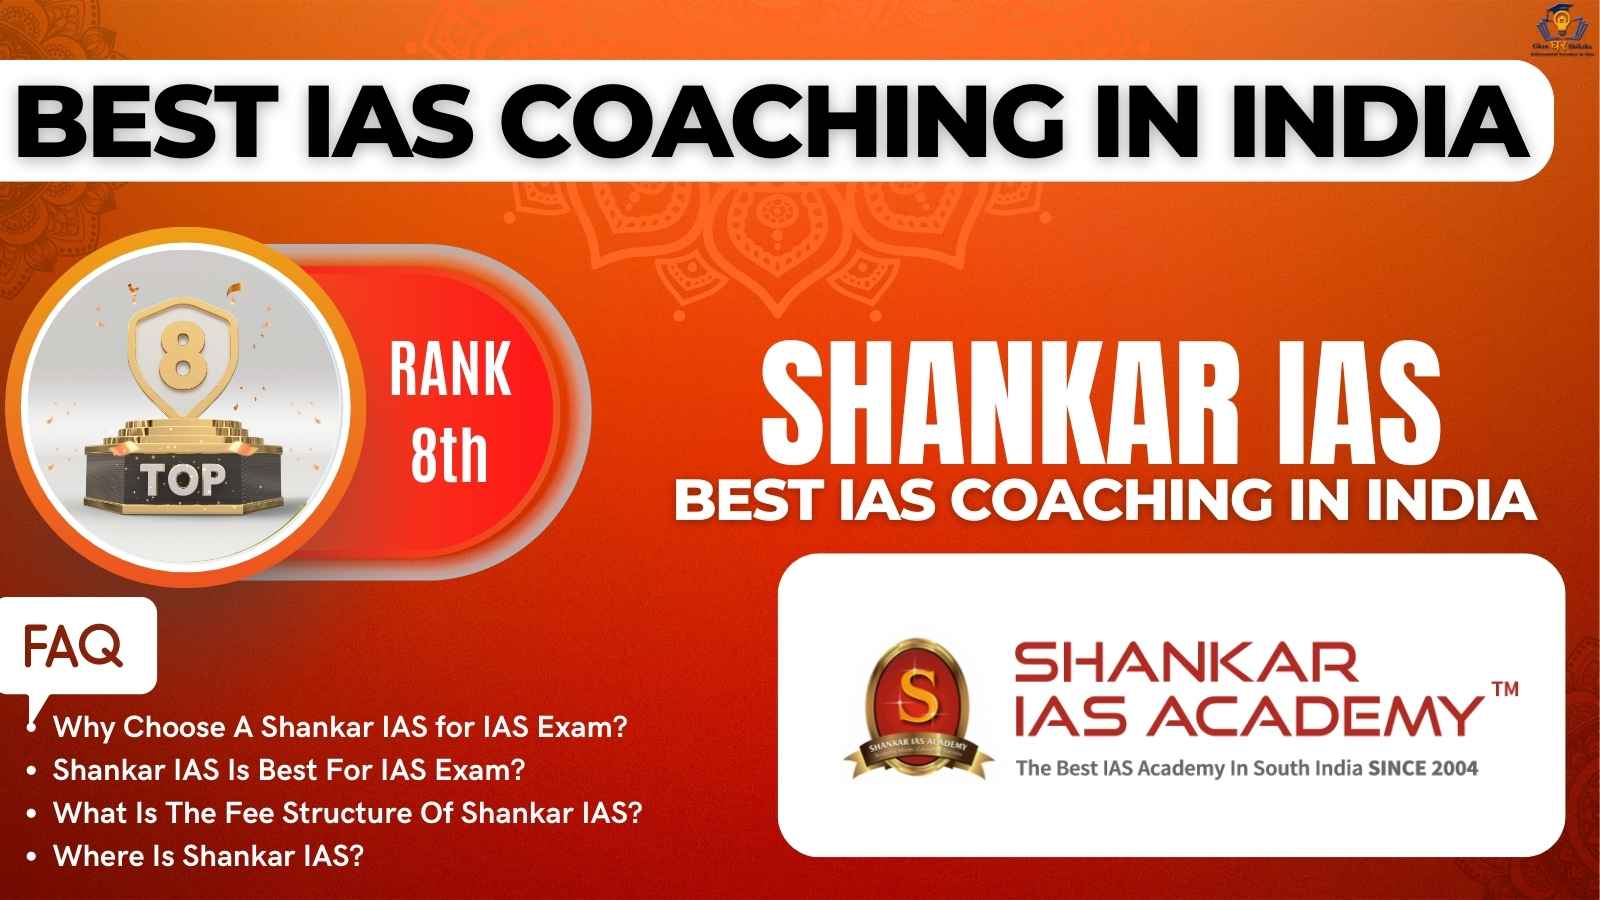  IAS Coaching Center of India